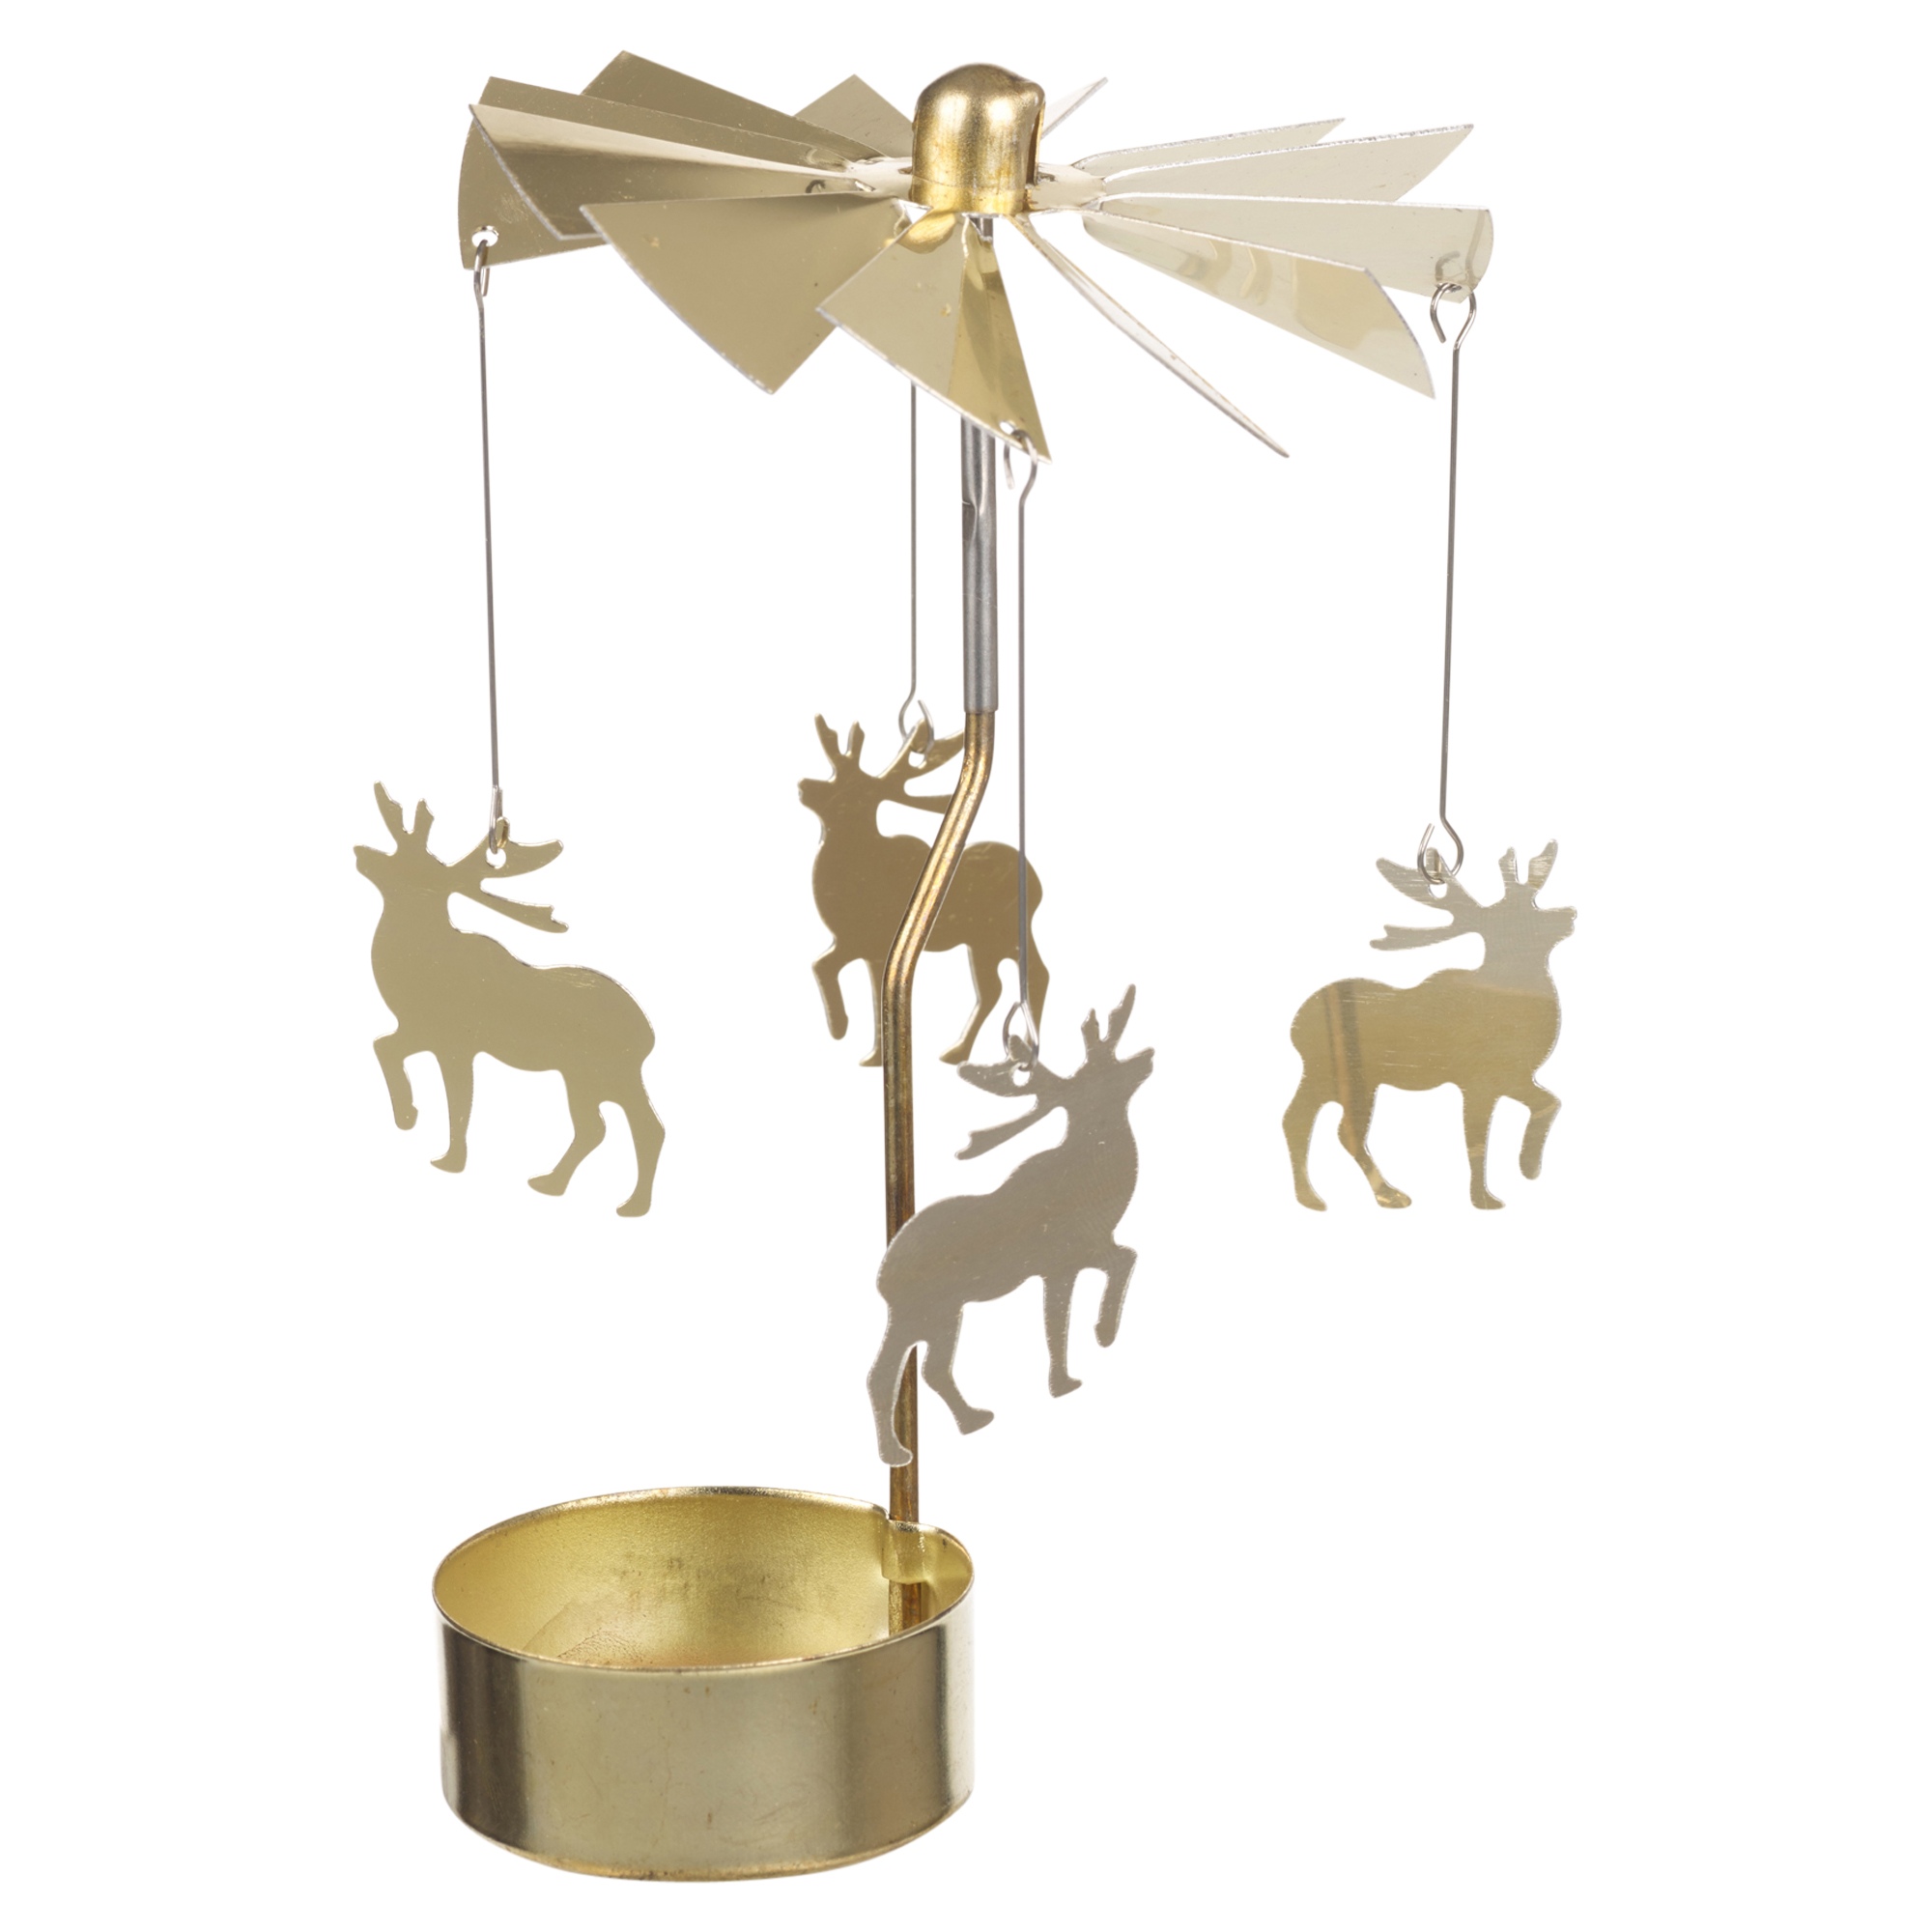 Tealight Carousel Rotary Tea Light Holder Christmas Gift Charms Spinning Candle Ebay